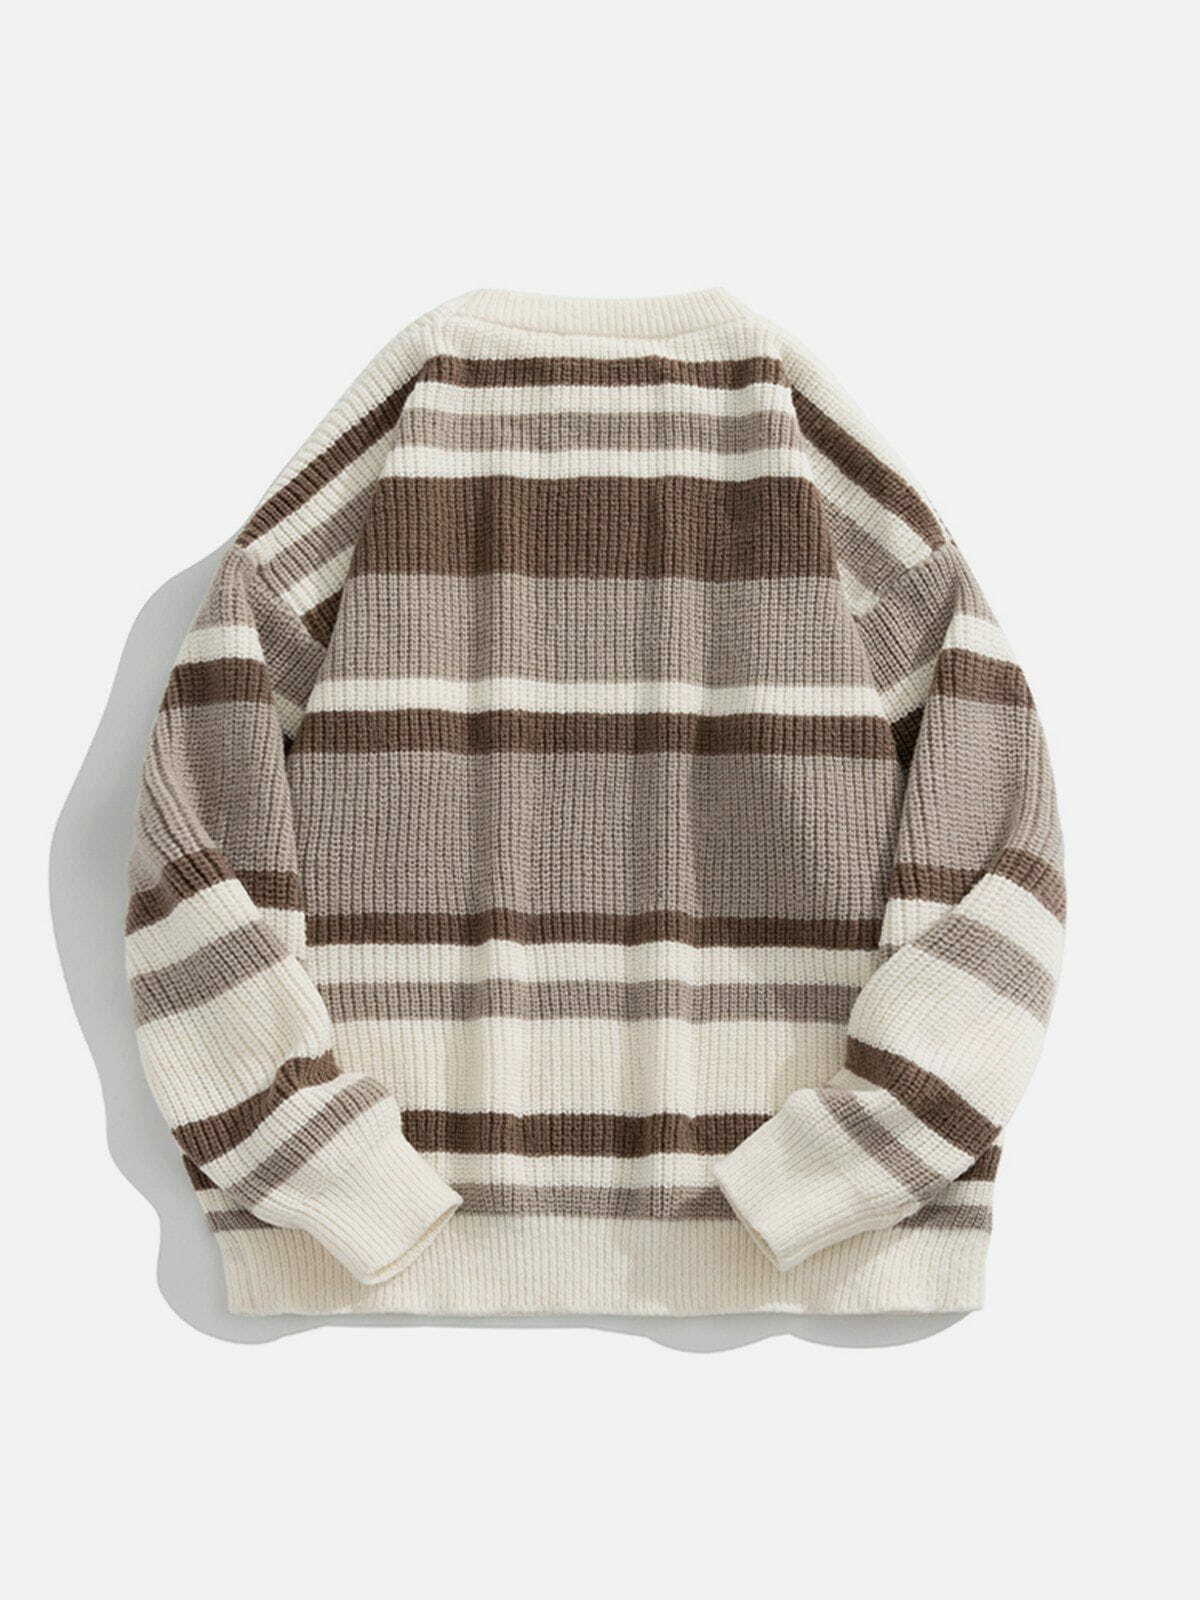 color block striped sweater edgy retro y2k fashion 5344